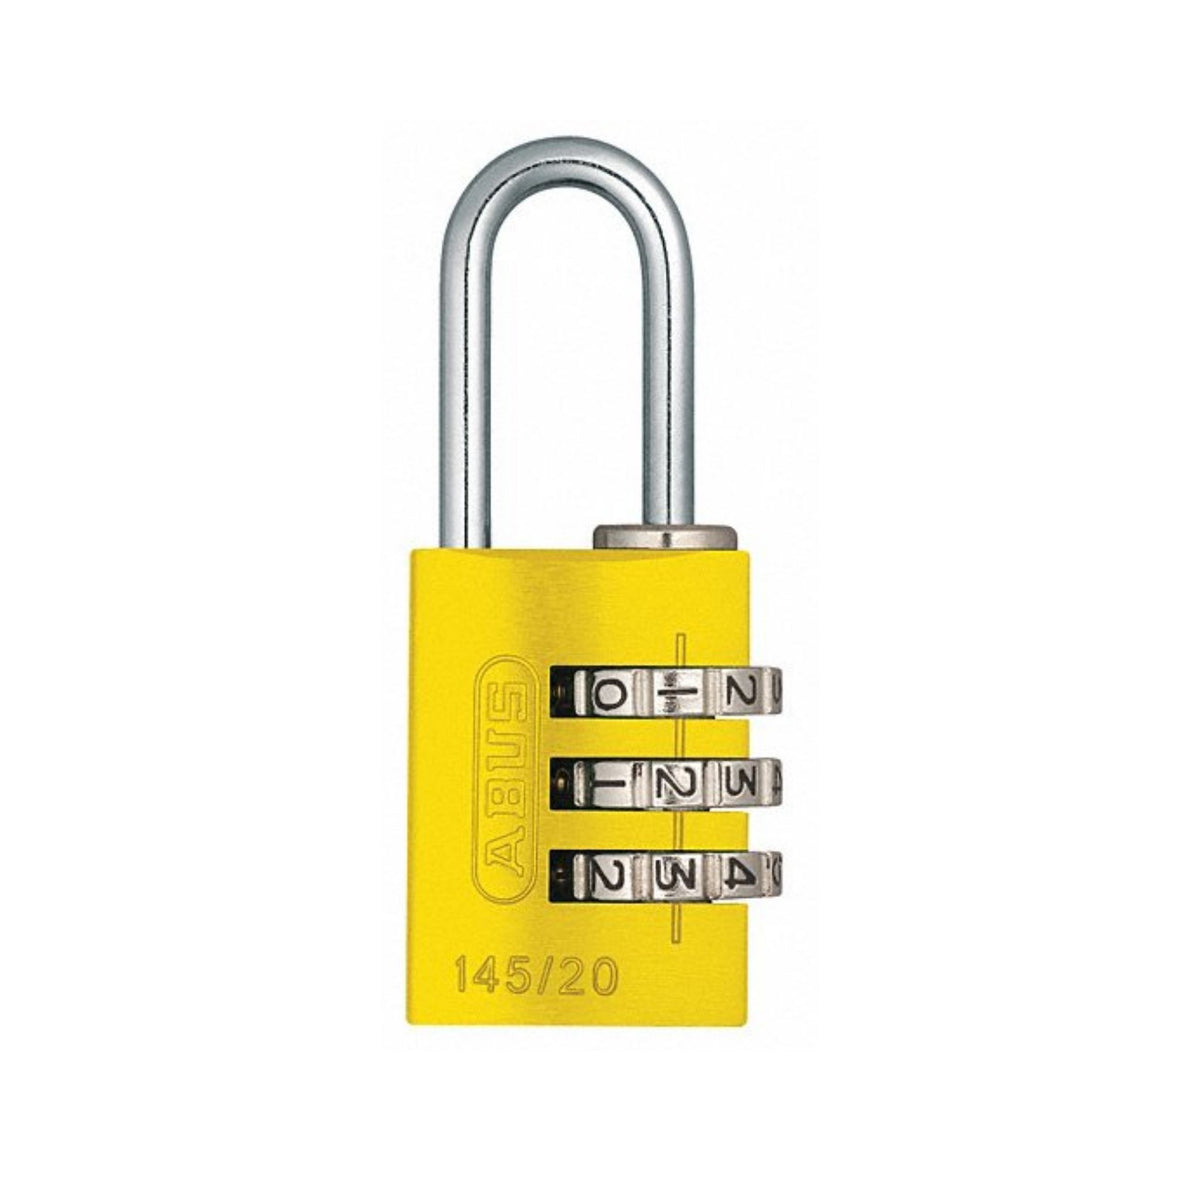 Abus 145/20 Yellow Combination Luggage Padlock - The Lock Source